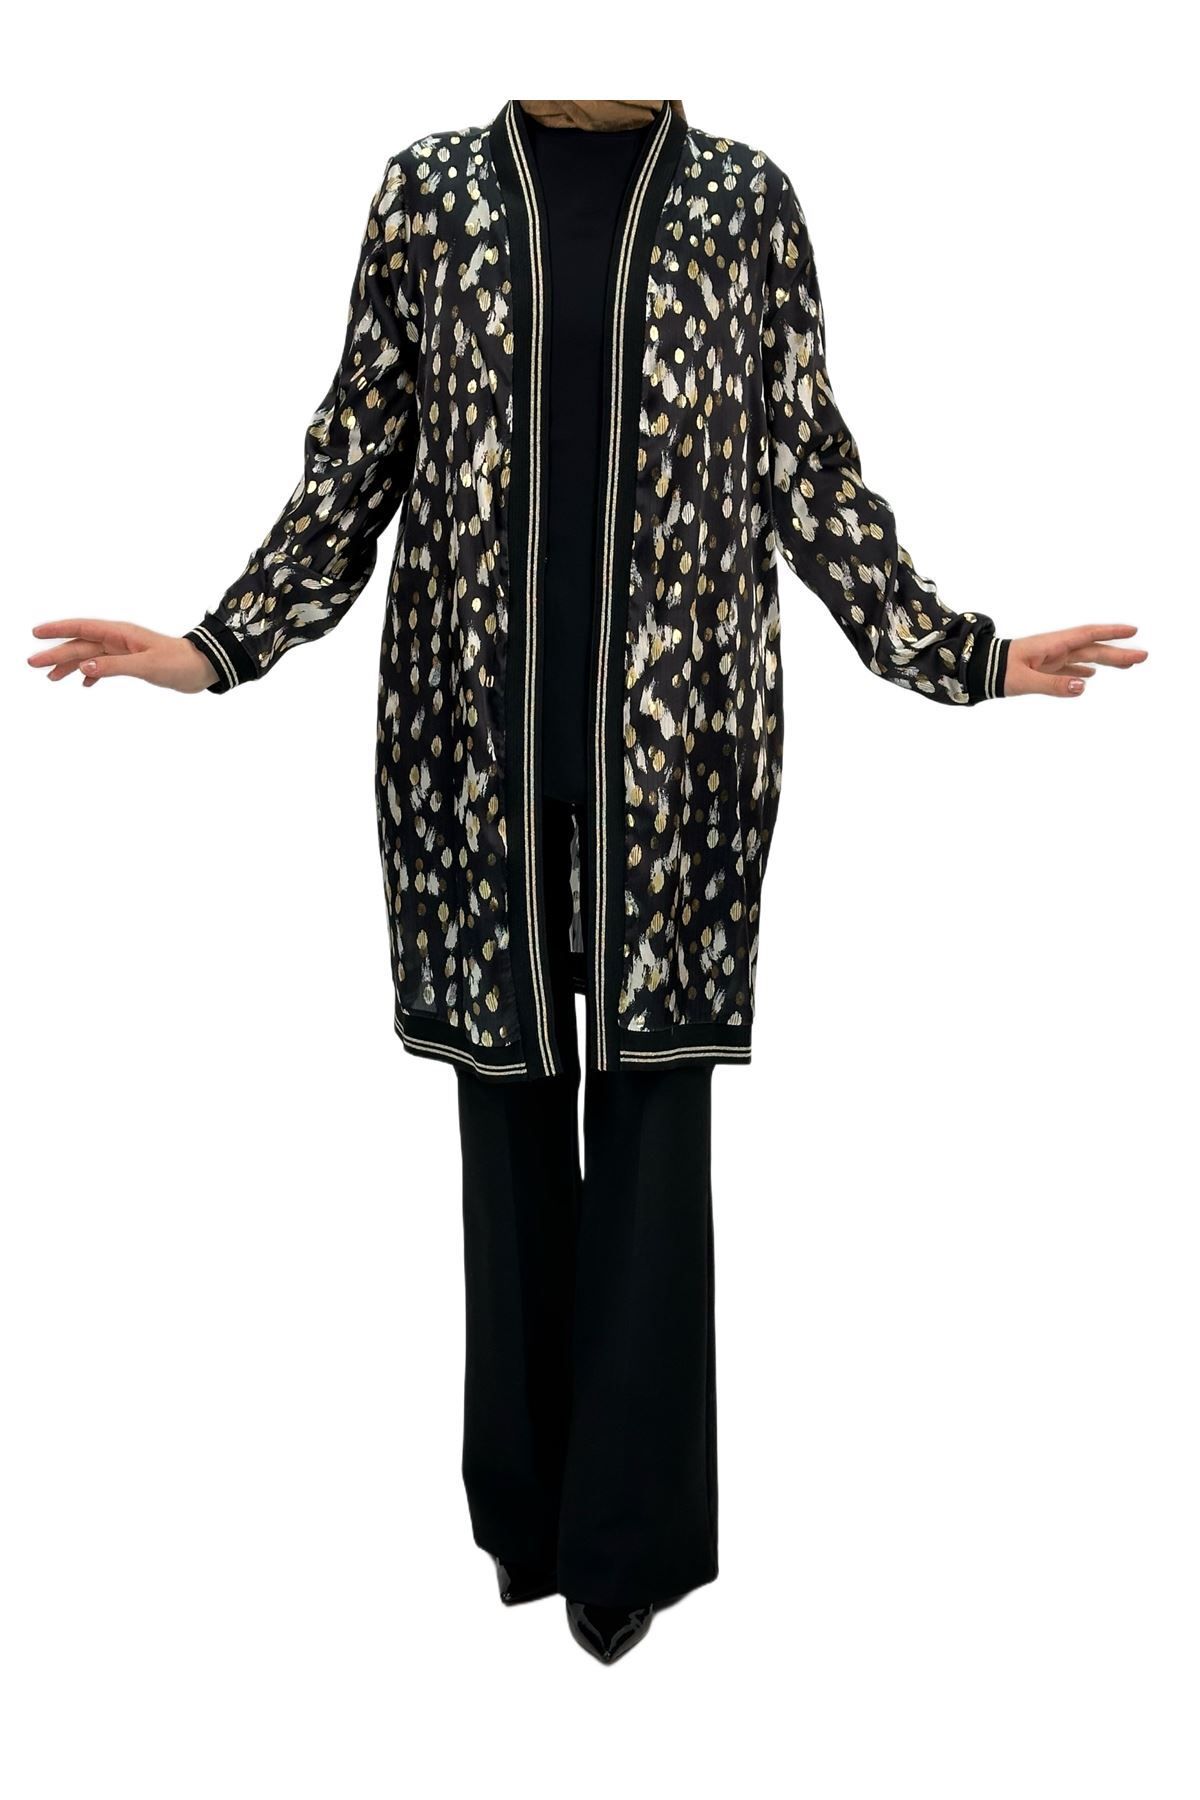 ottoman wear OTW9203 Şifon Ceket Siyah